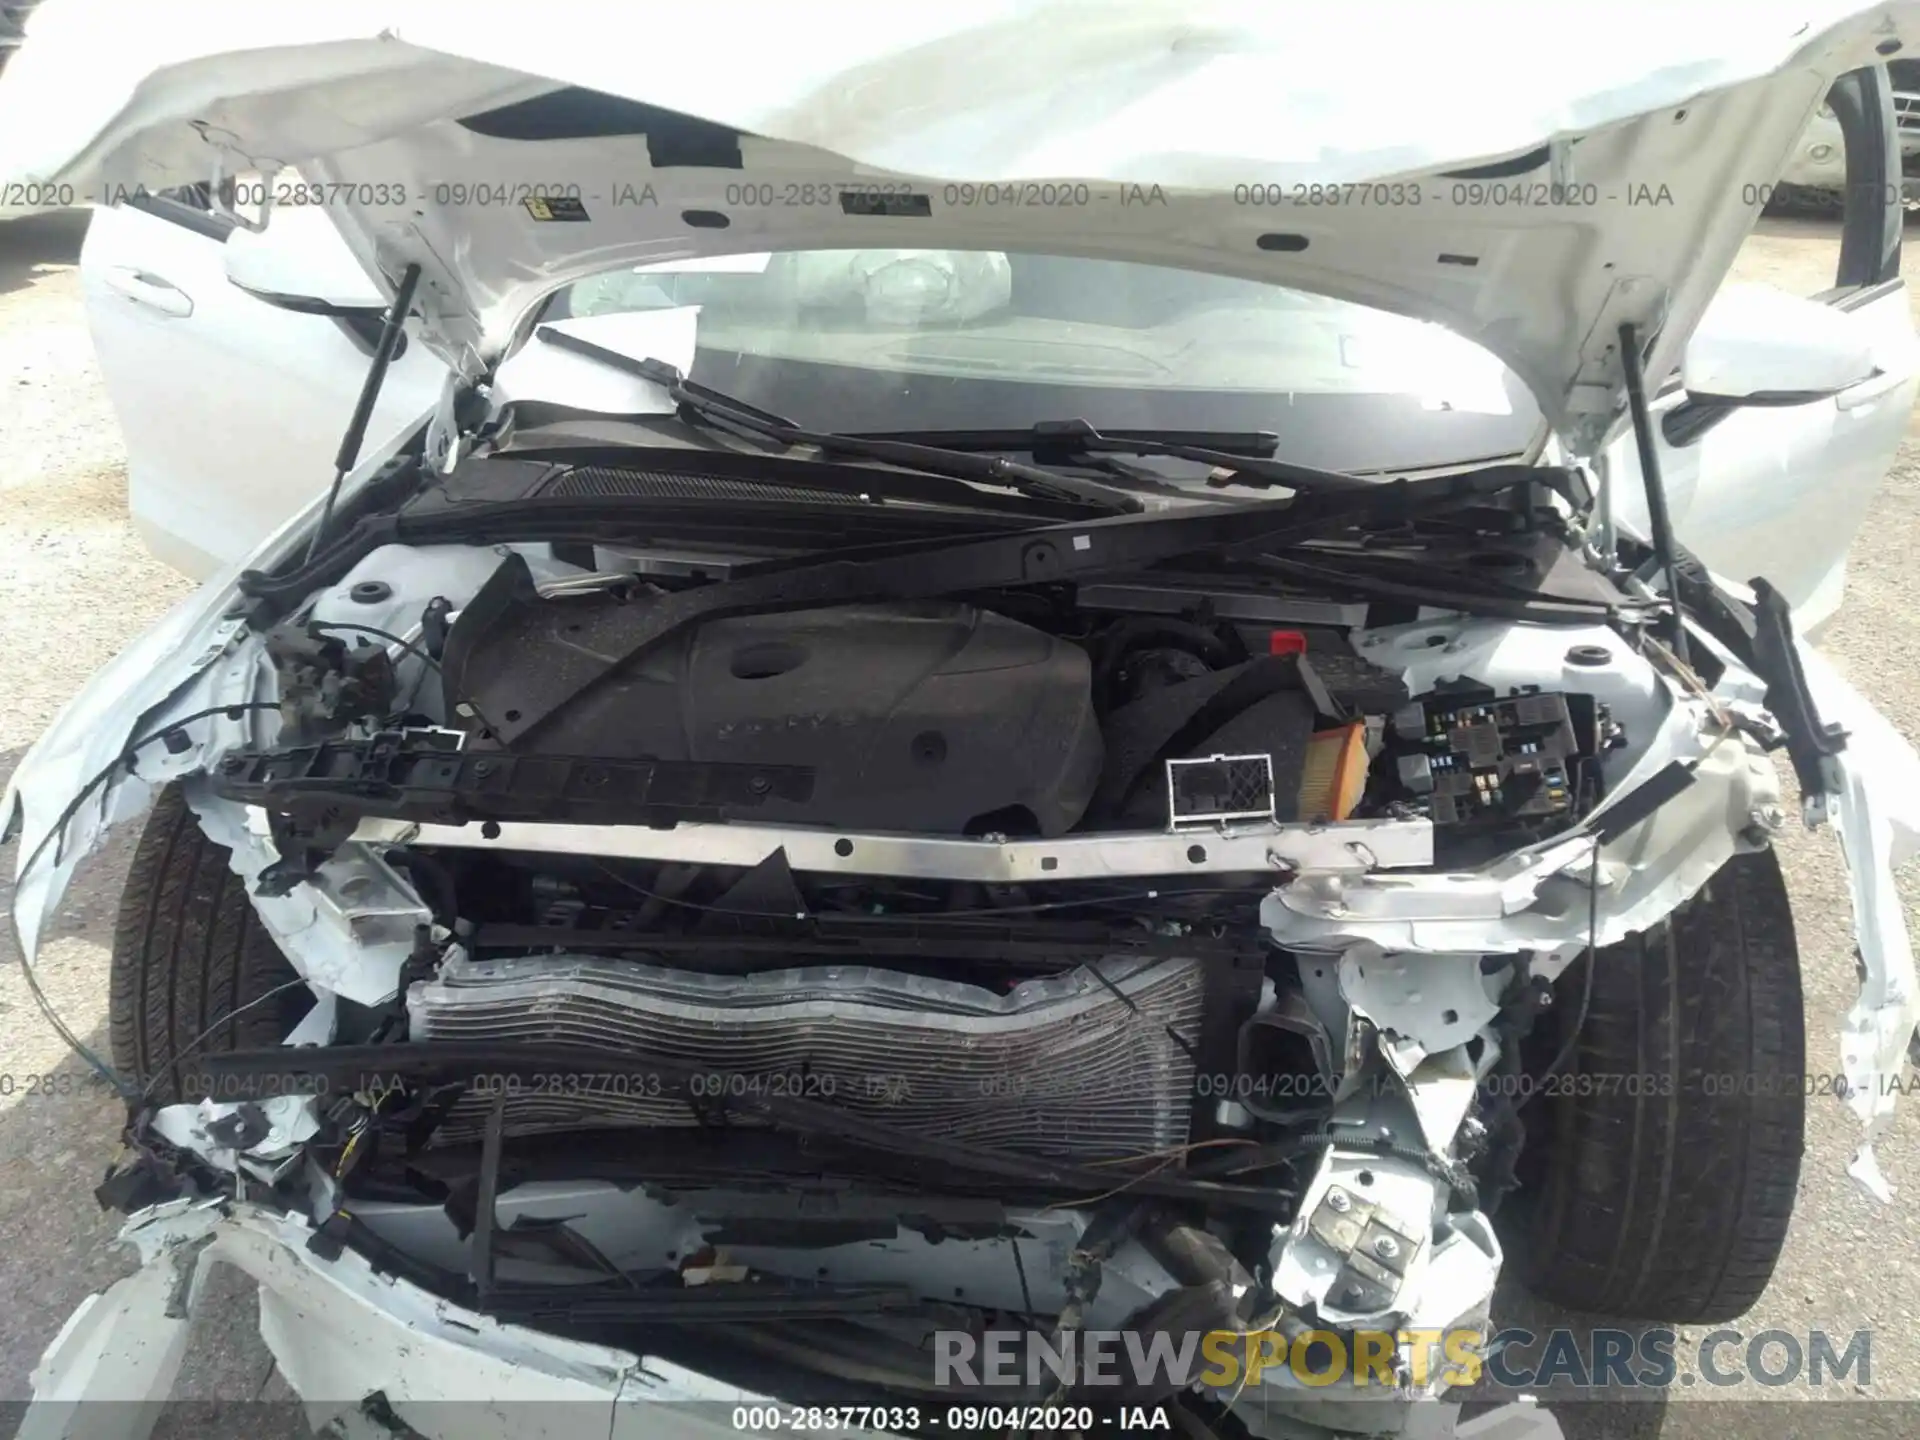 10 Photograph of a damaged car 7JRA22TK5LG057122 VOLVO S60 2020